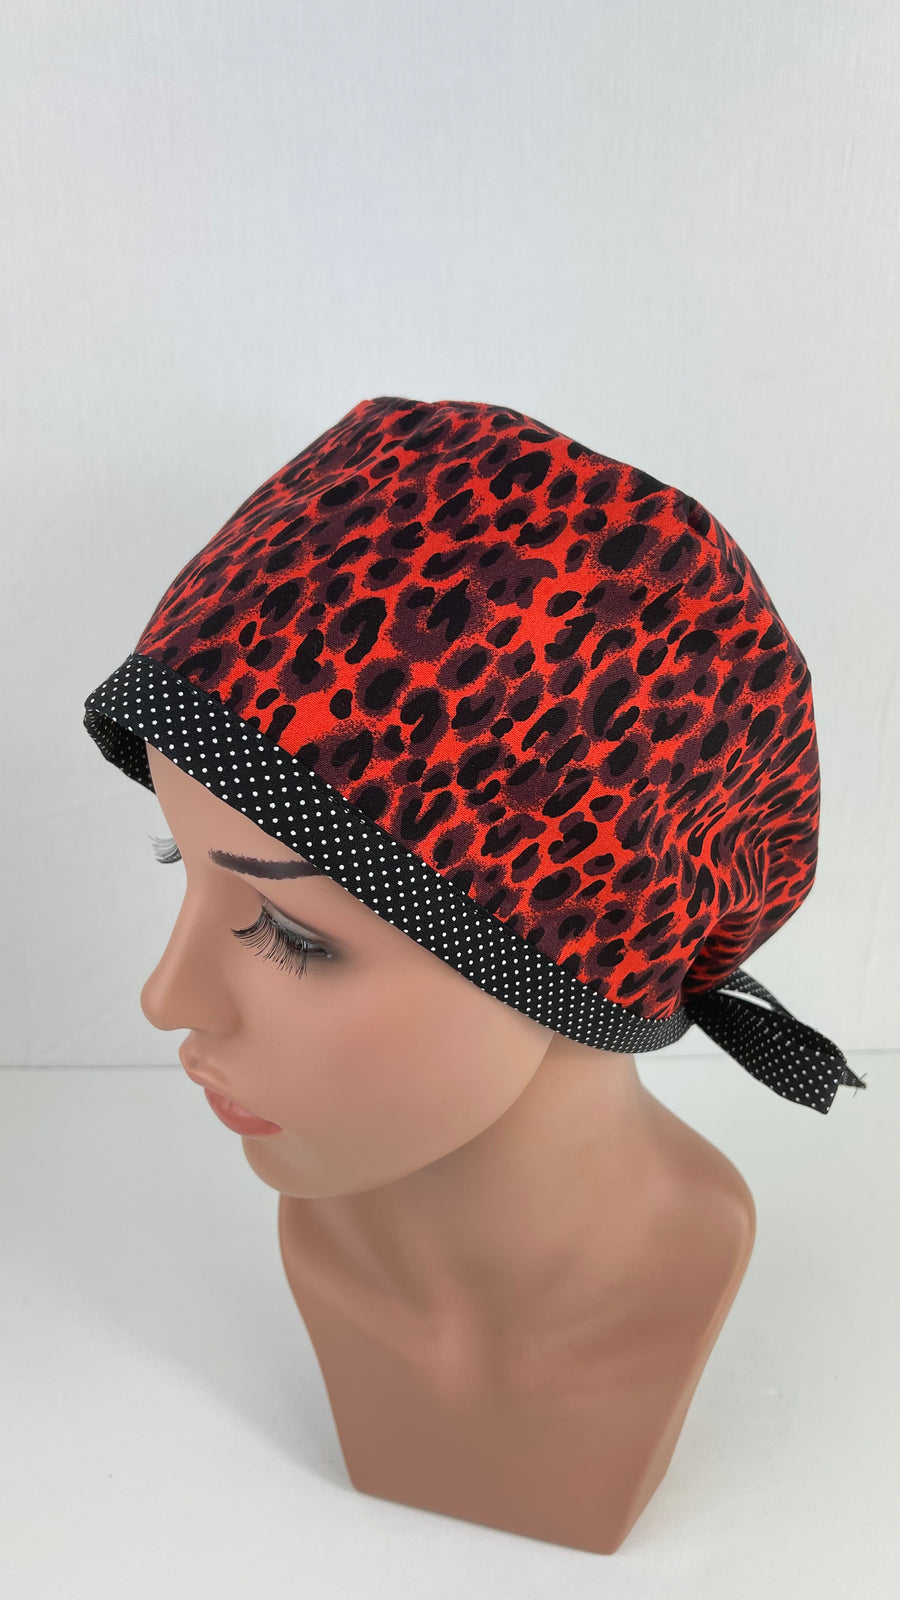 Cheetah Print in Red Pixie Cap